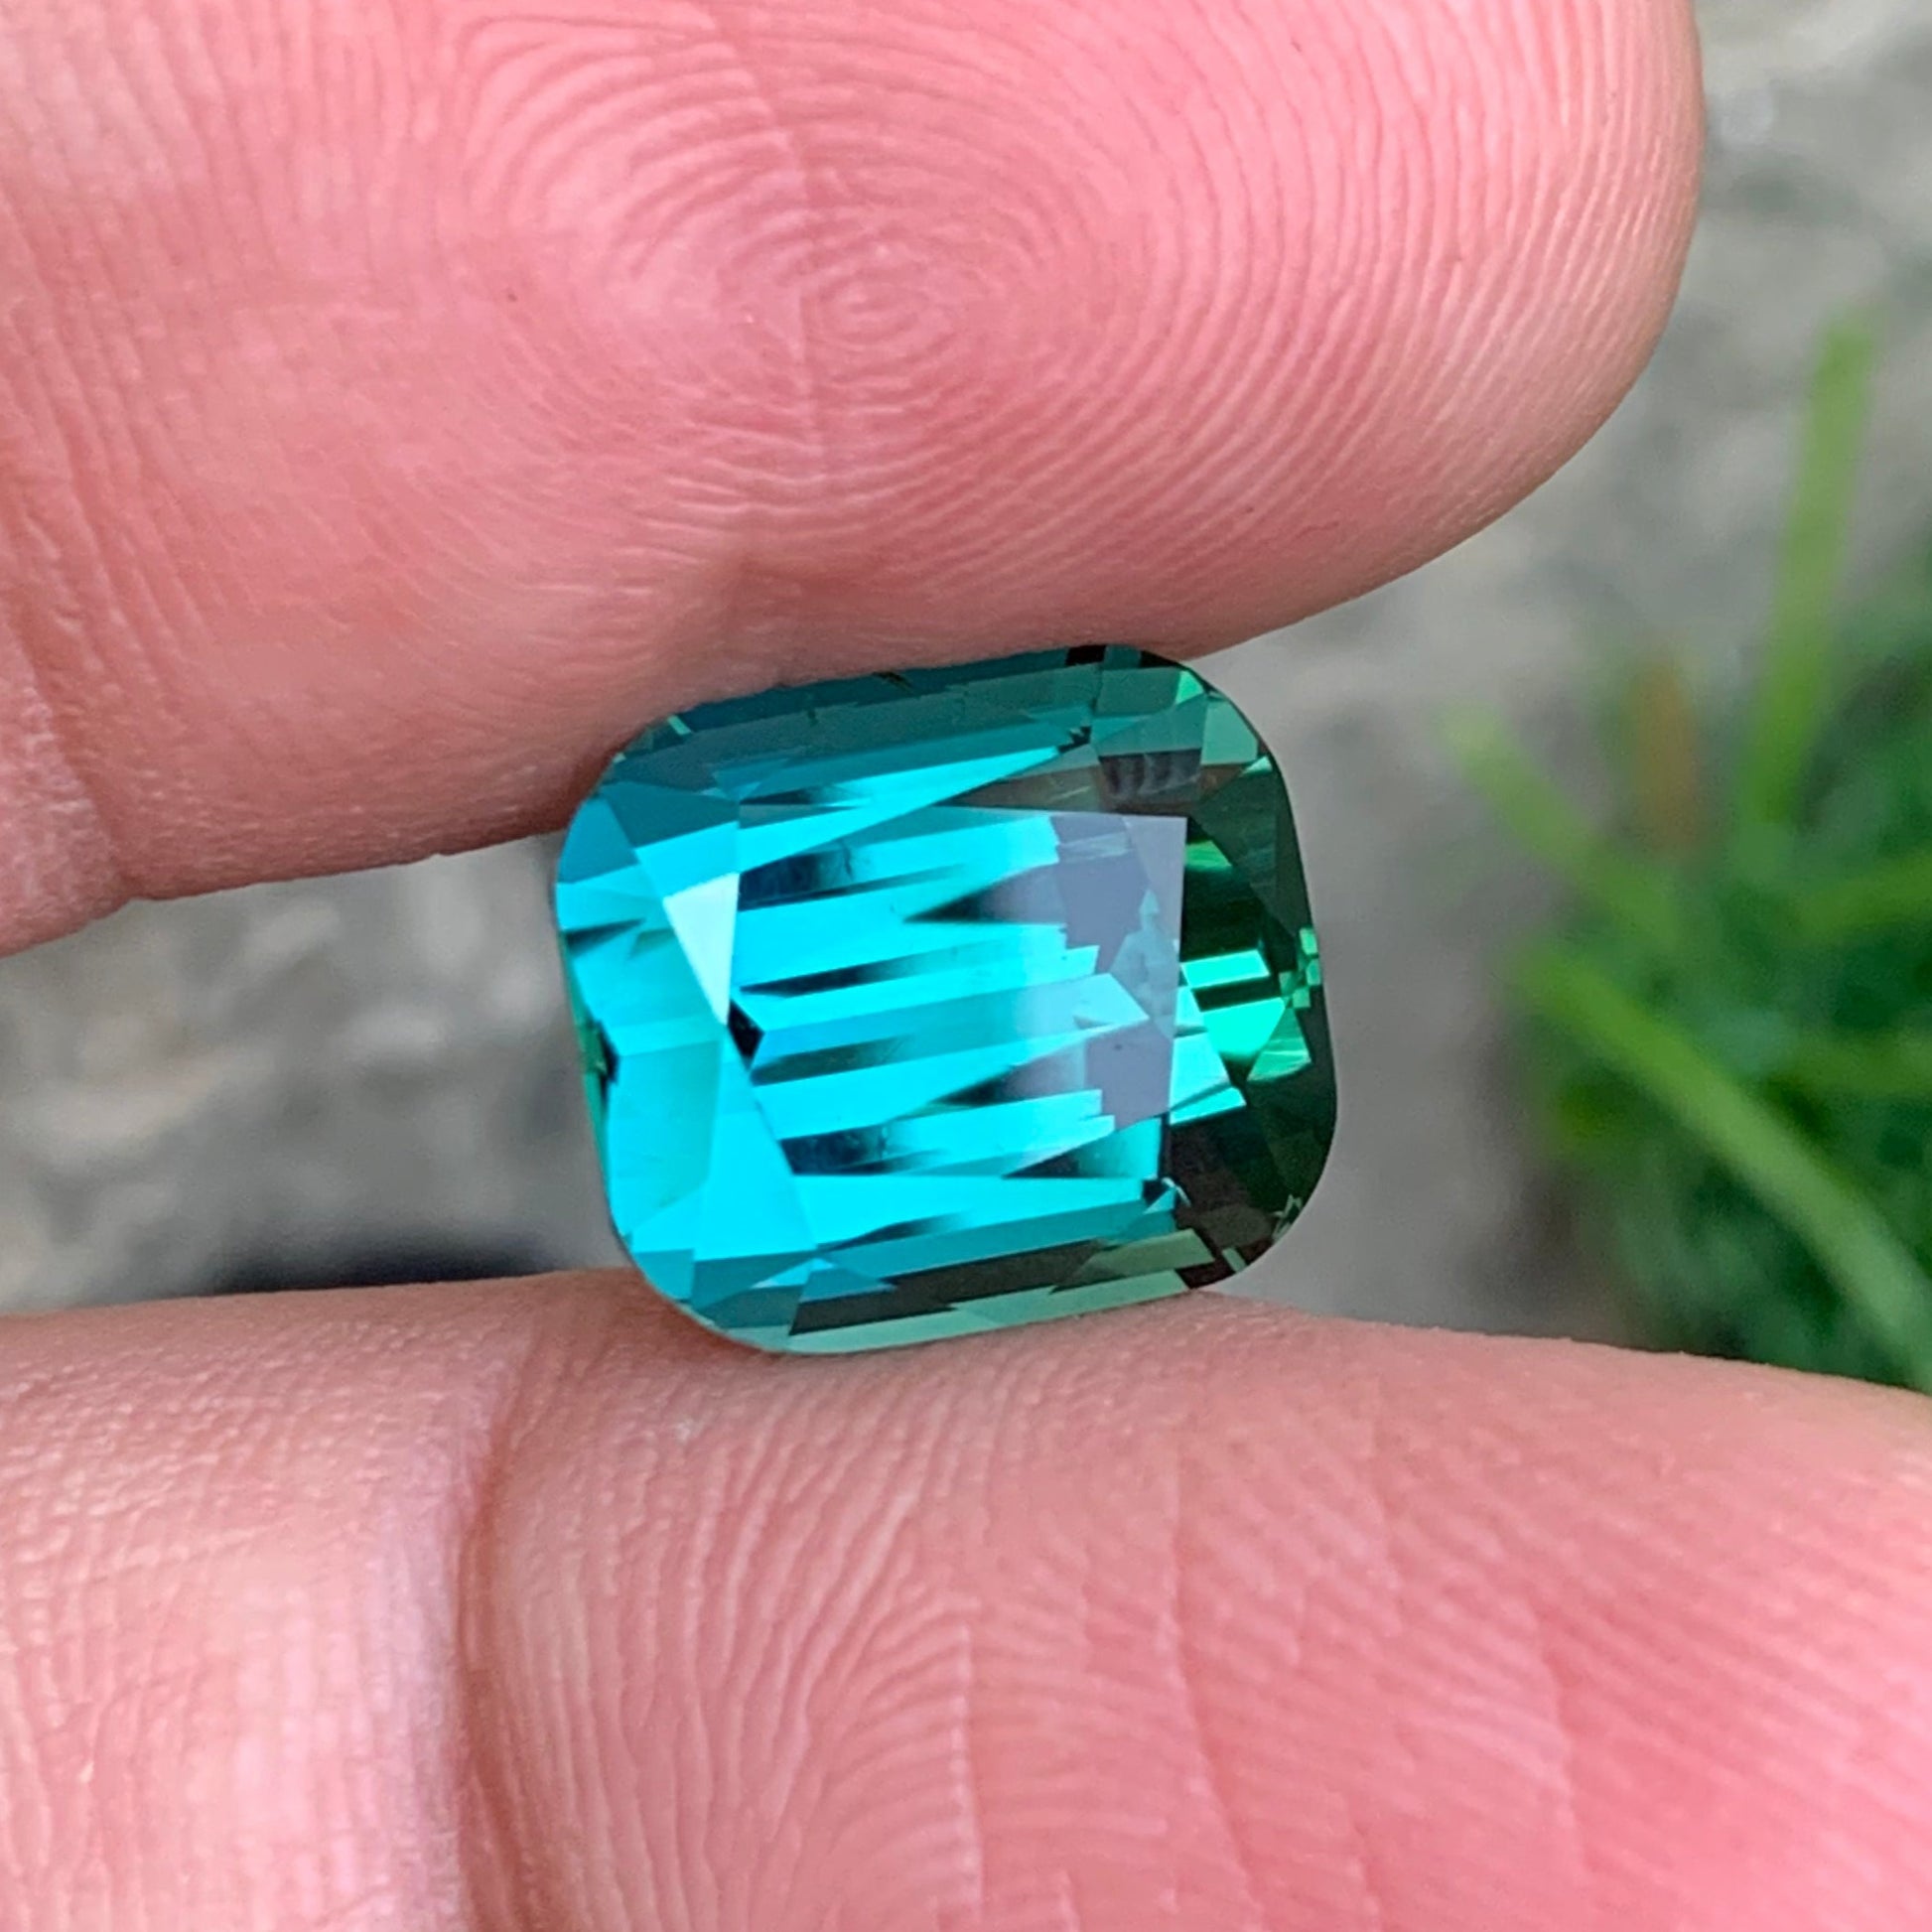 bluish green stone